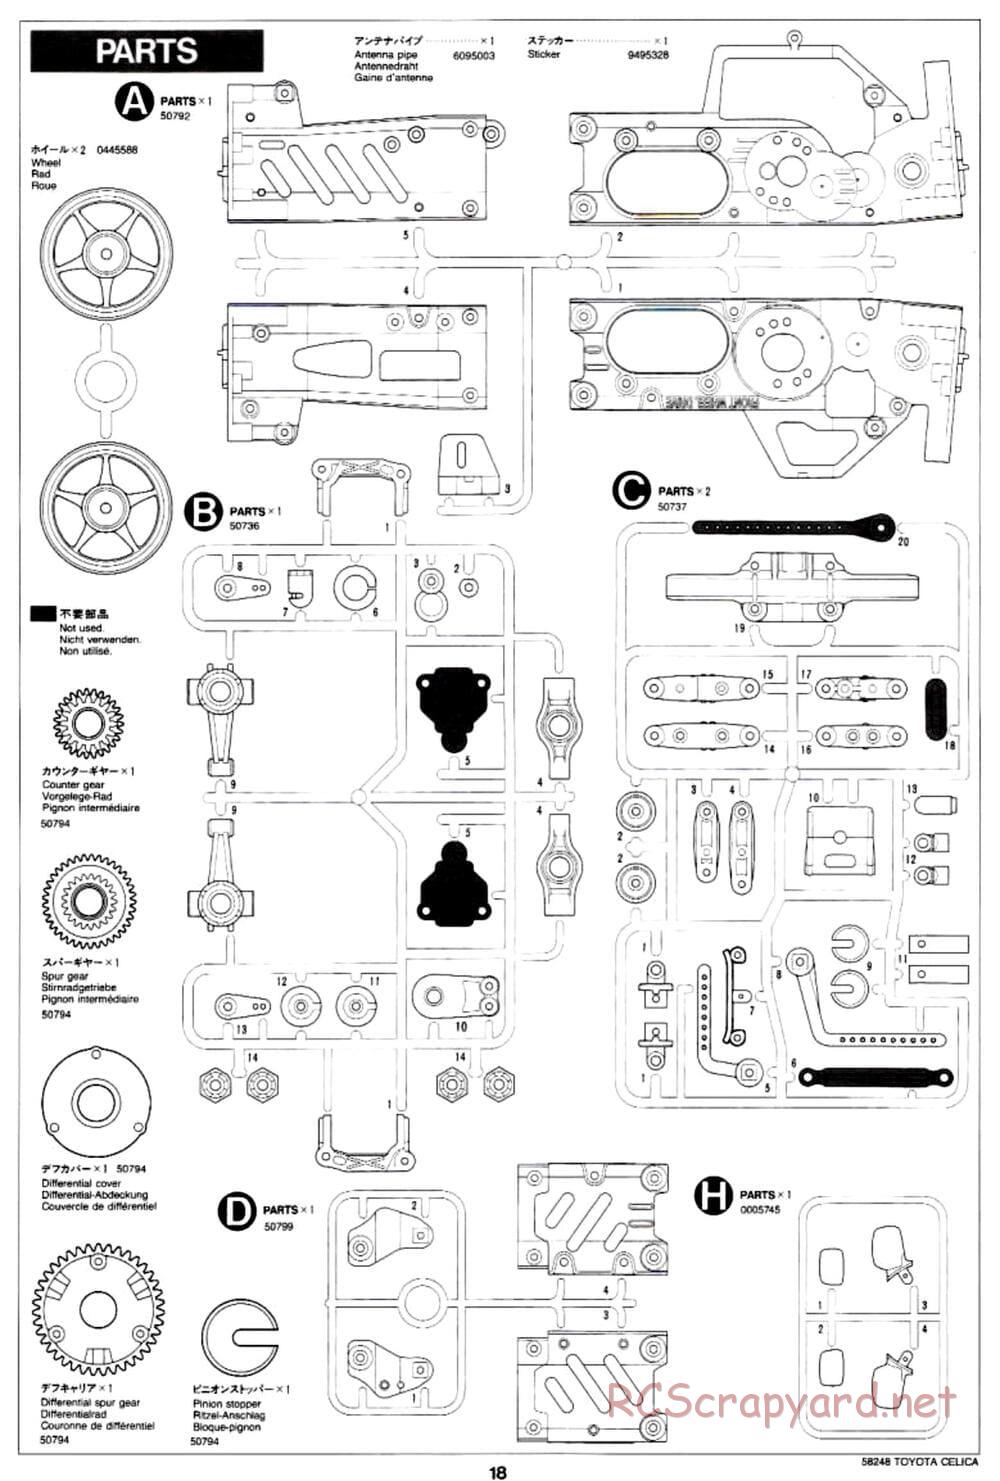 Tamiya - Toyota Celica - FF-02 Chassis - Manual - Page 18